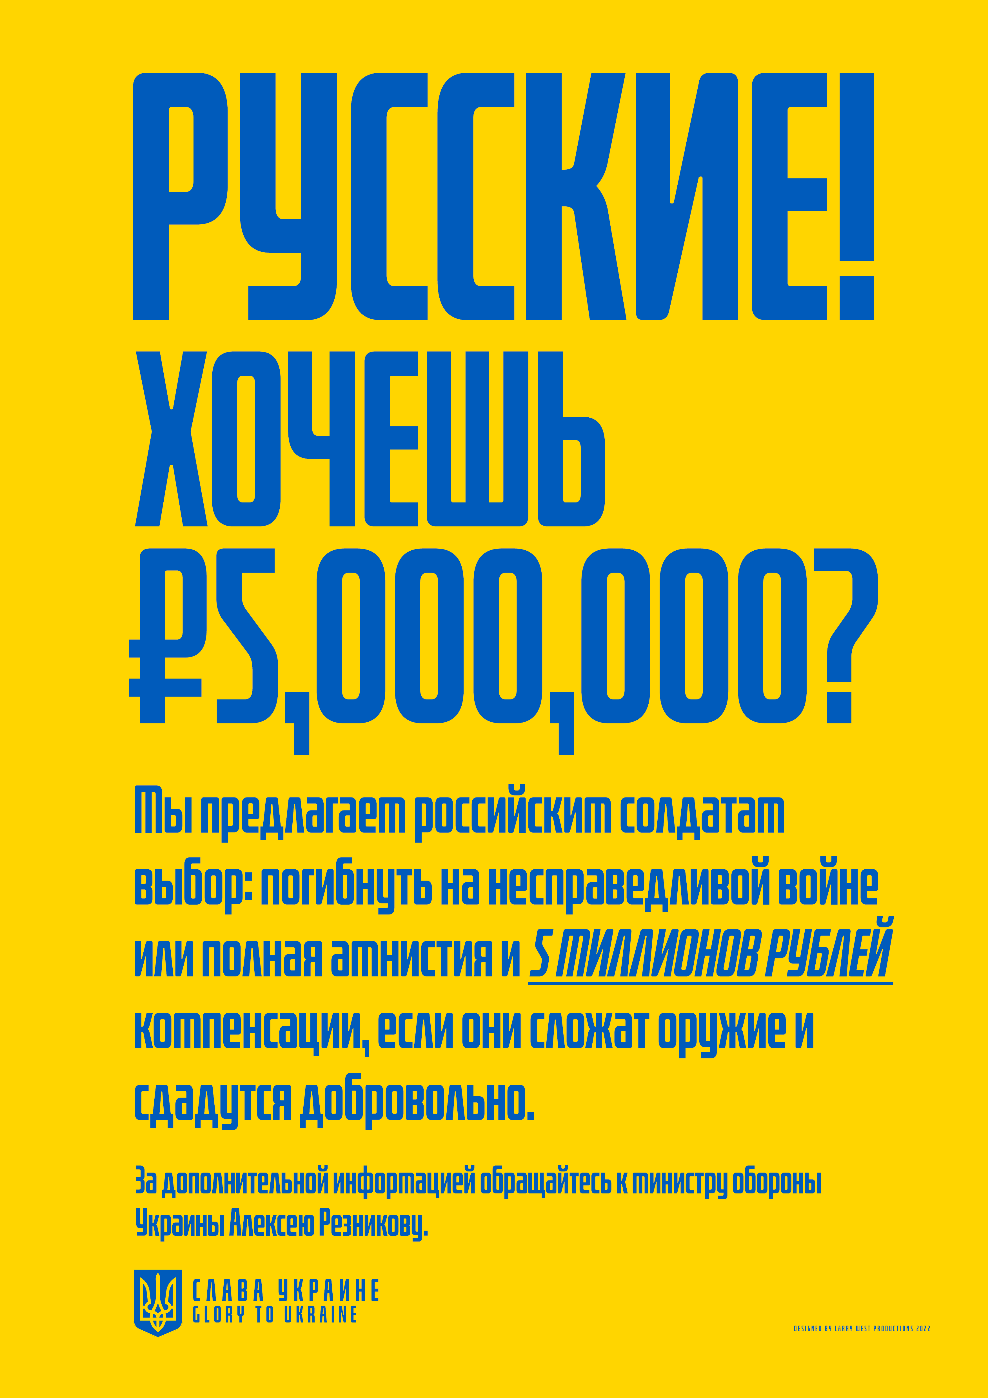 Russian, do you want ₽5 Million?